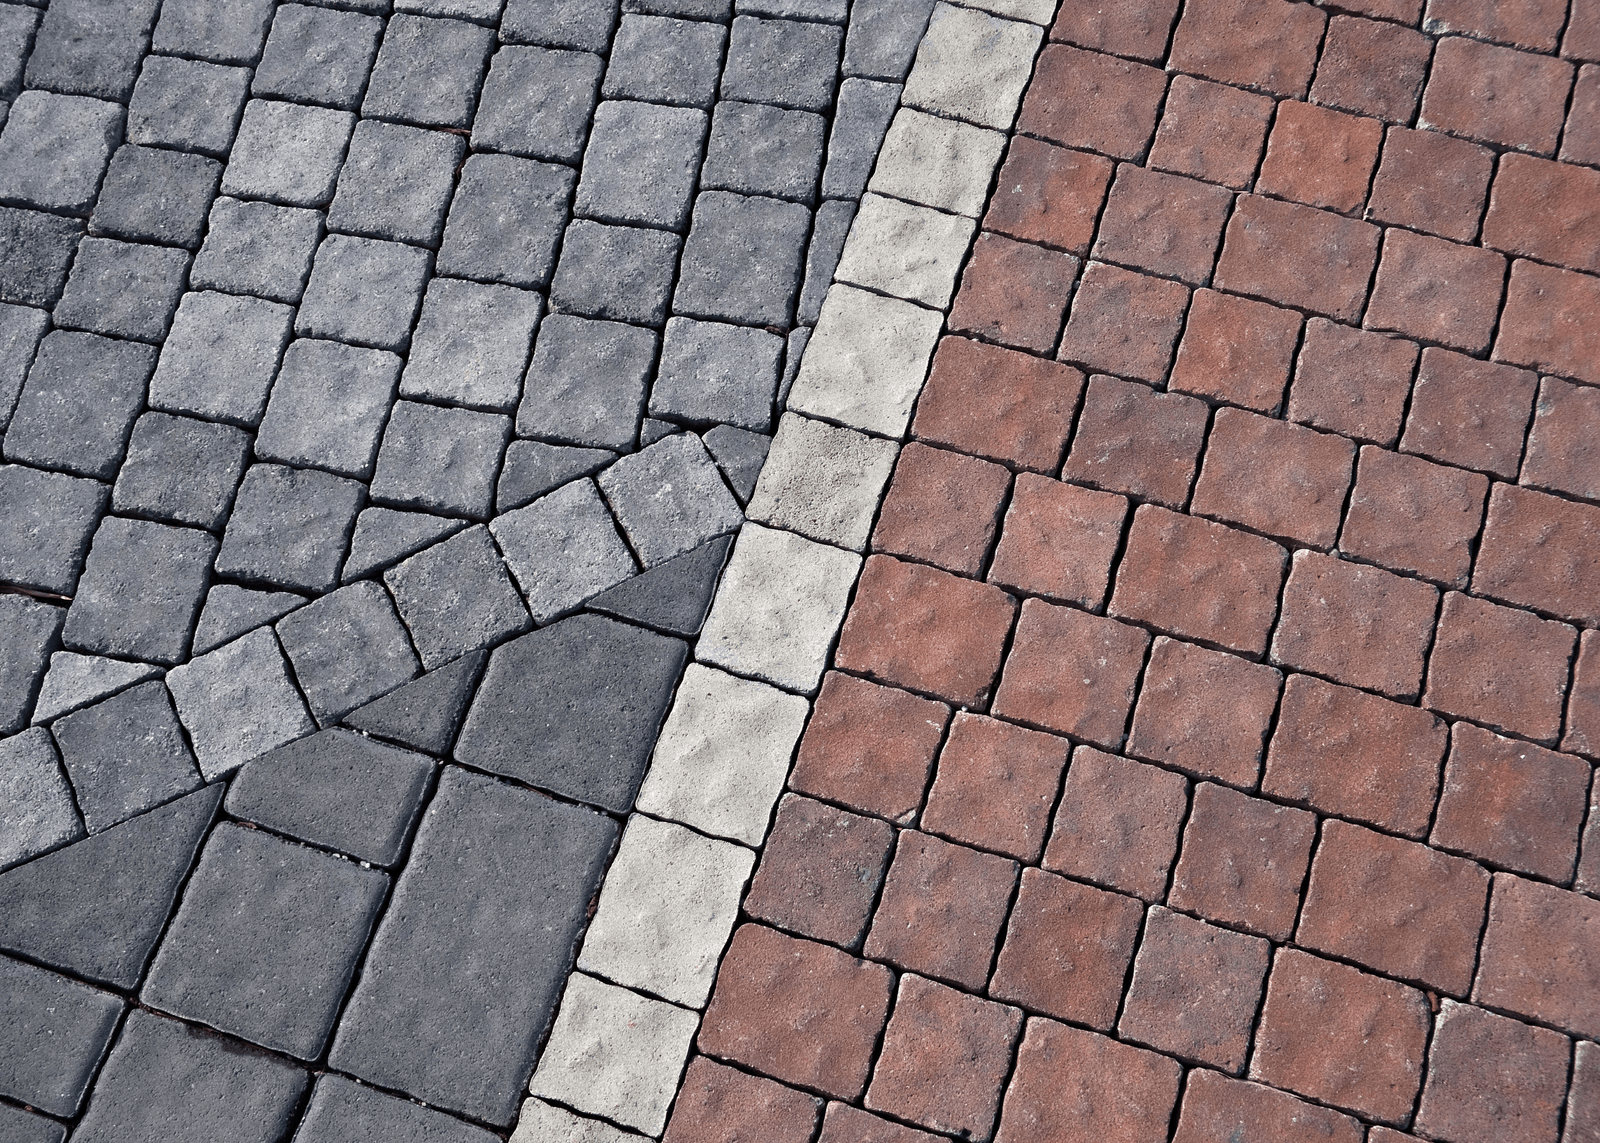 Pathway pattern of paver stones by Handyman Jax